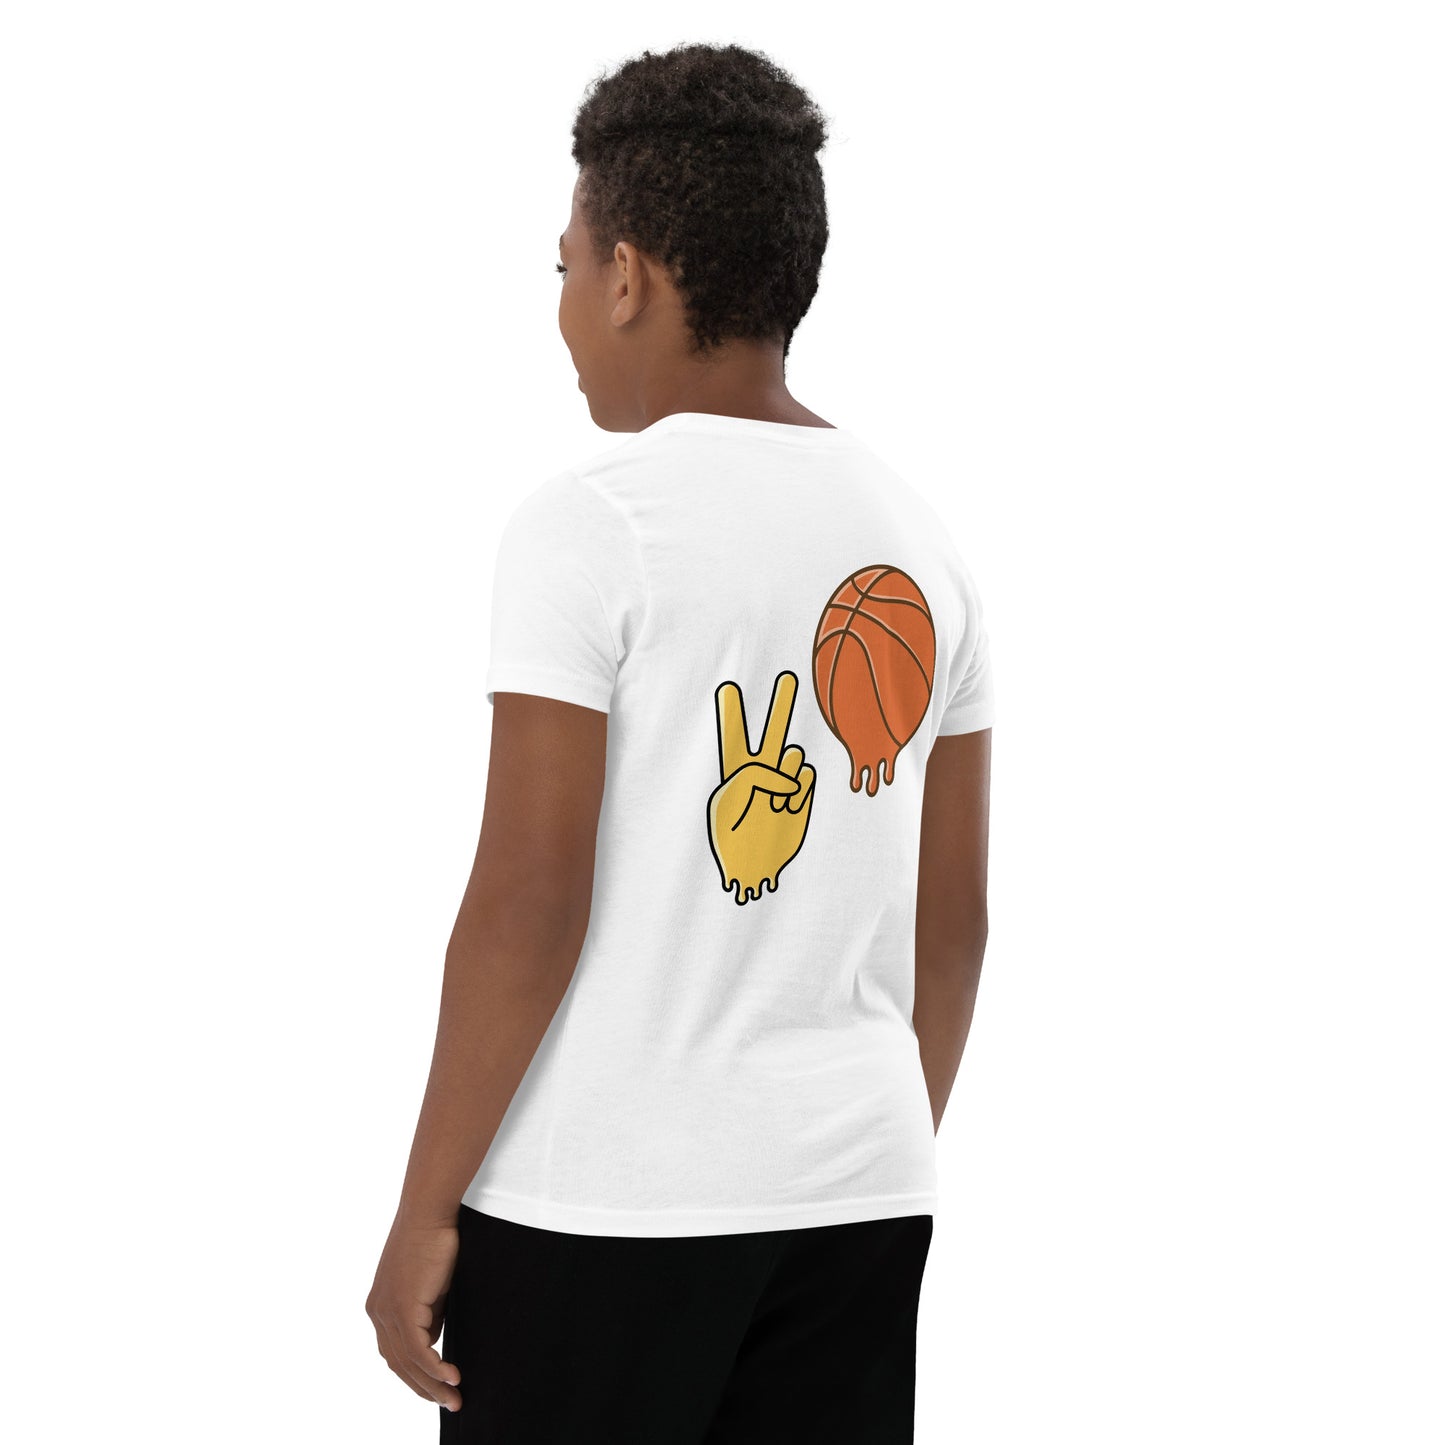 Shoot for 2 Basketball Short Sleeve T-Shirt